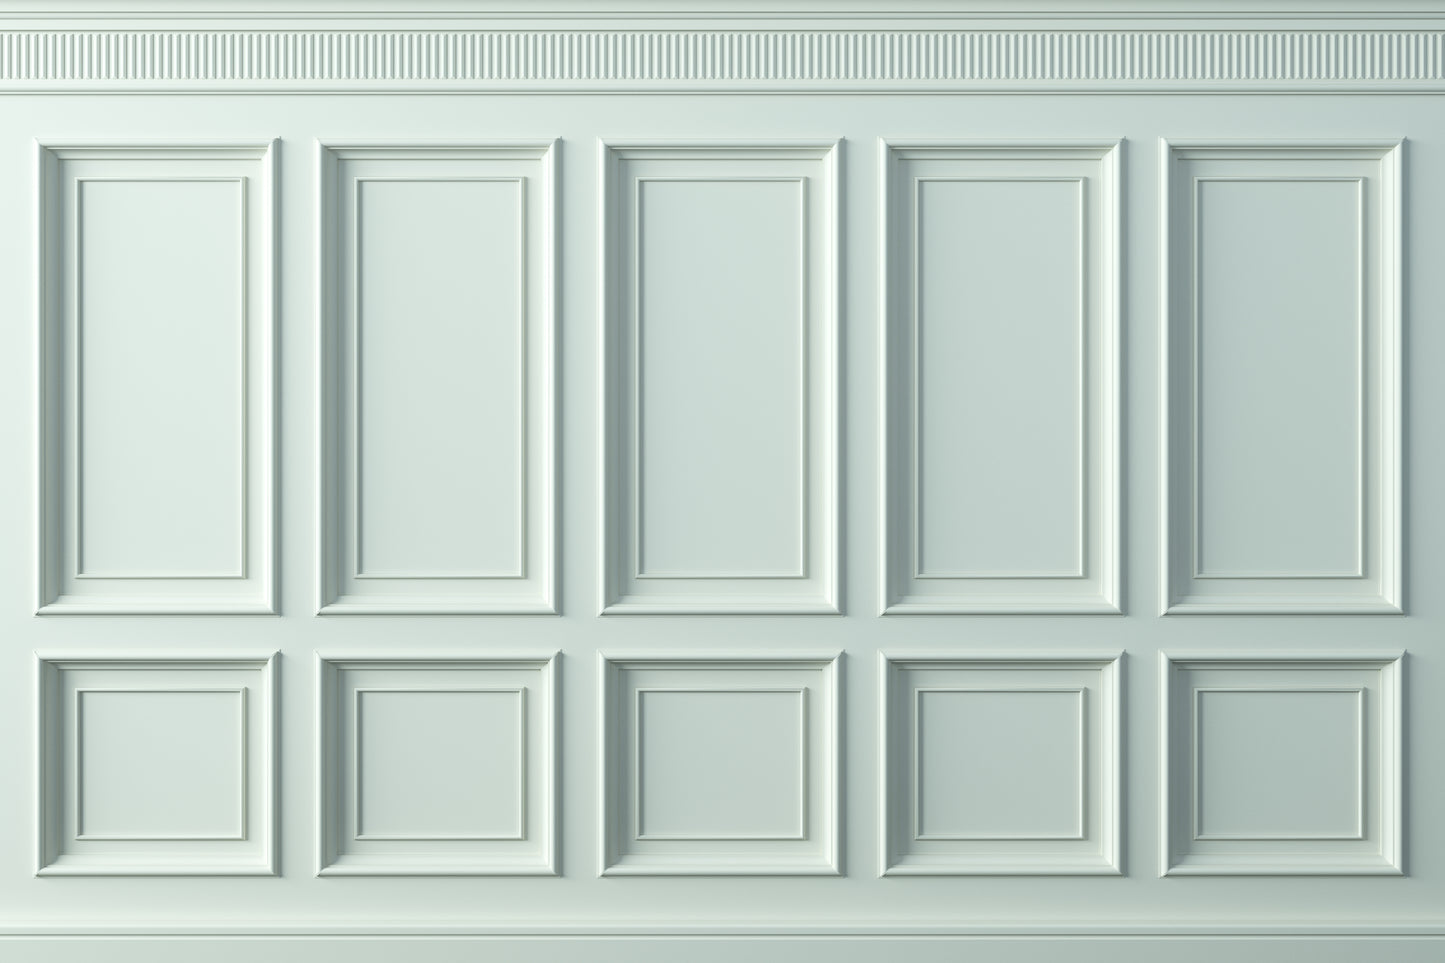 classic wall white wood panels design technology